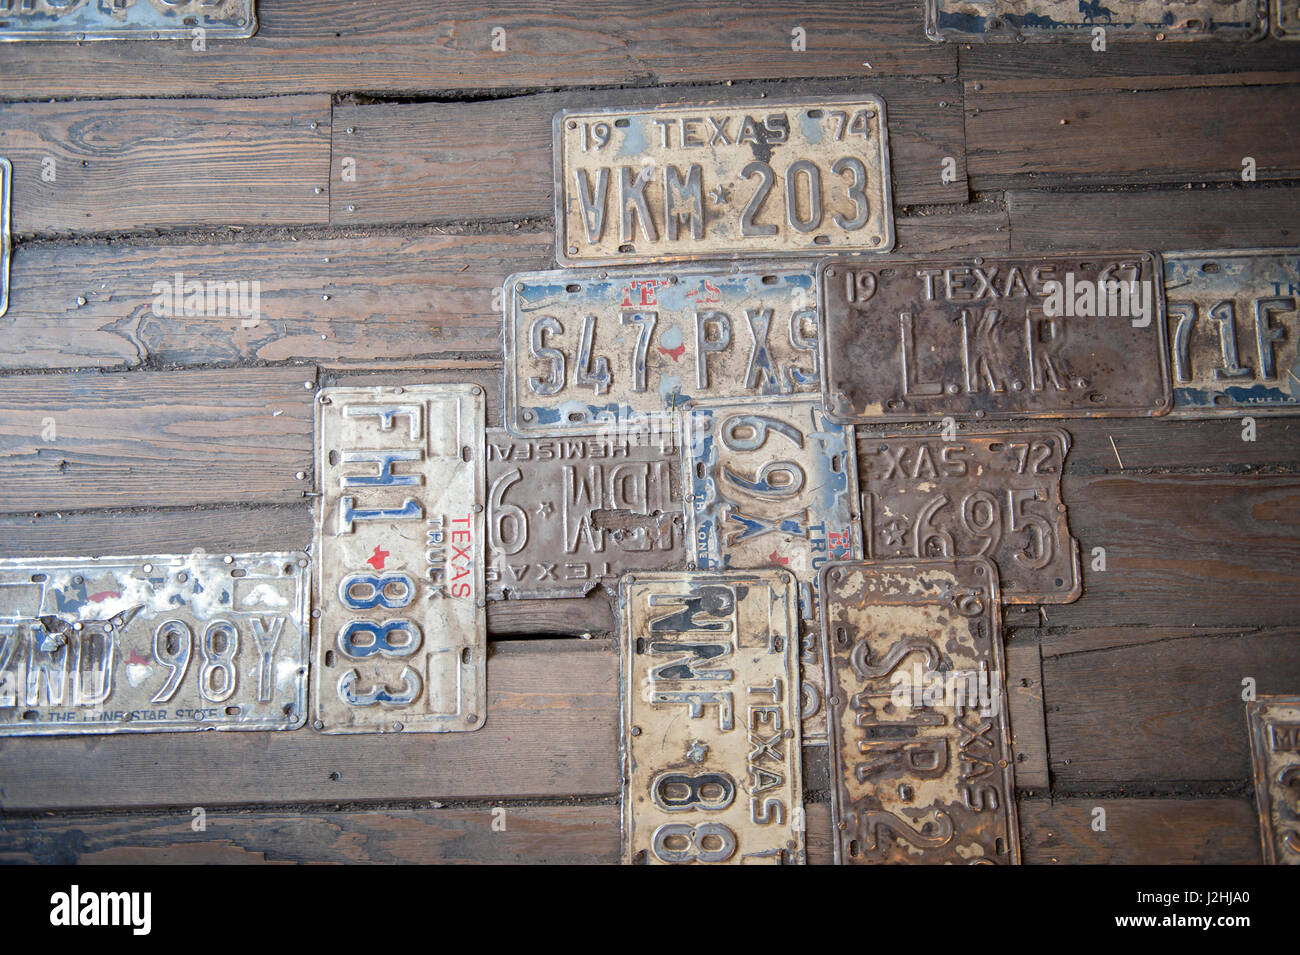 Texas license plates, wall art, Gruene Hall, Gruene, Texas, Usa (Editorial Use Only) Stock Photo